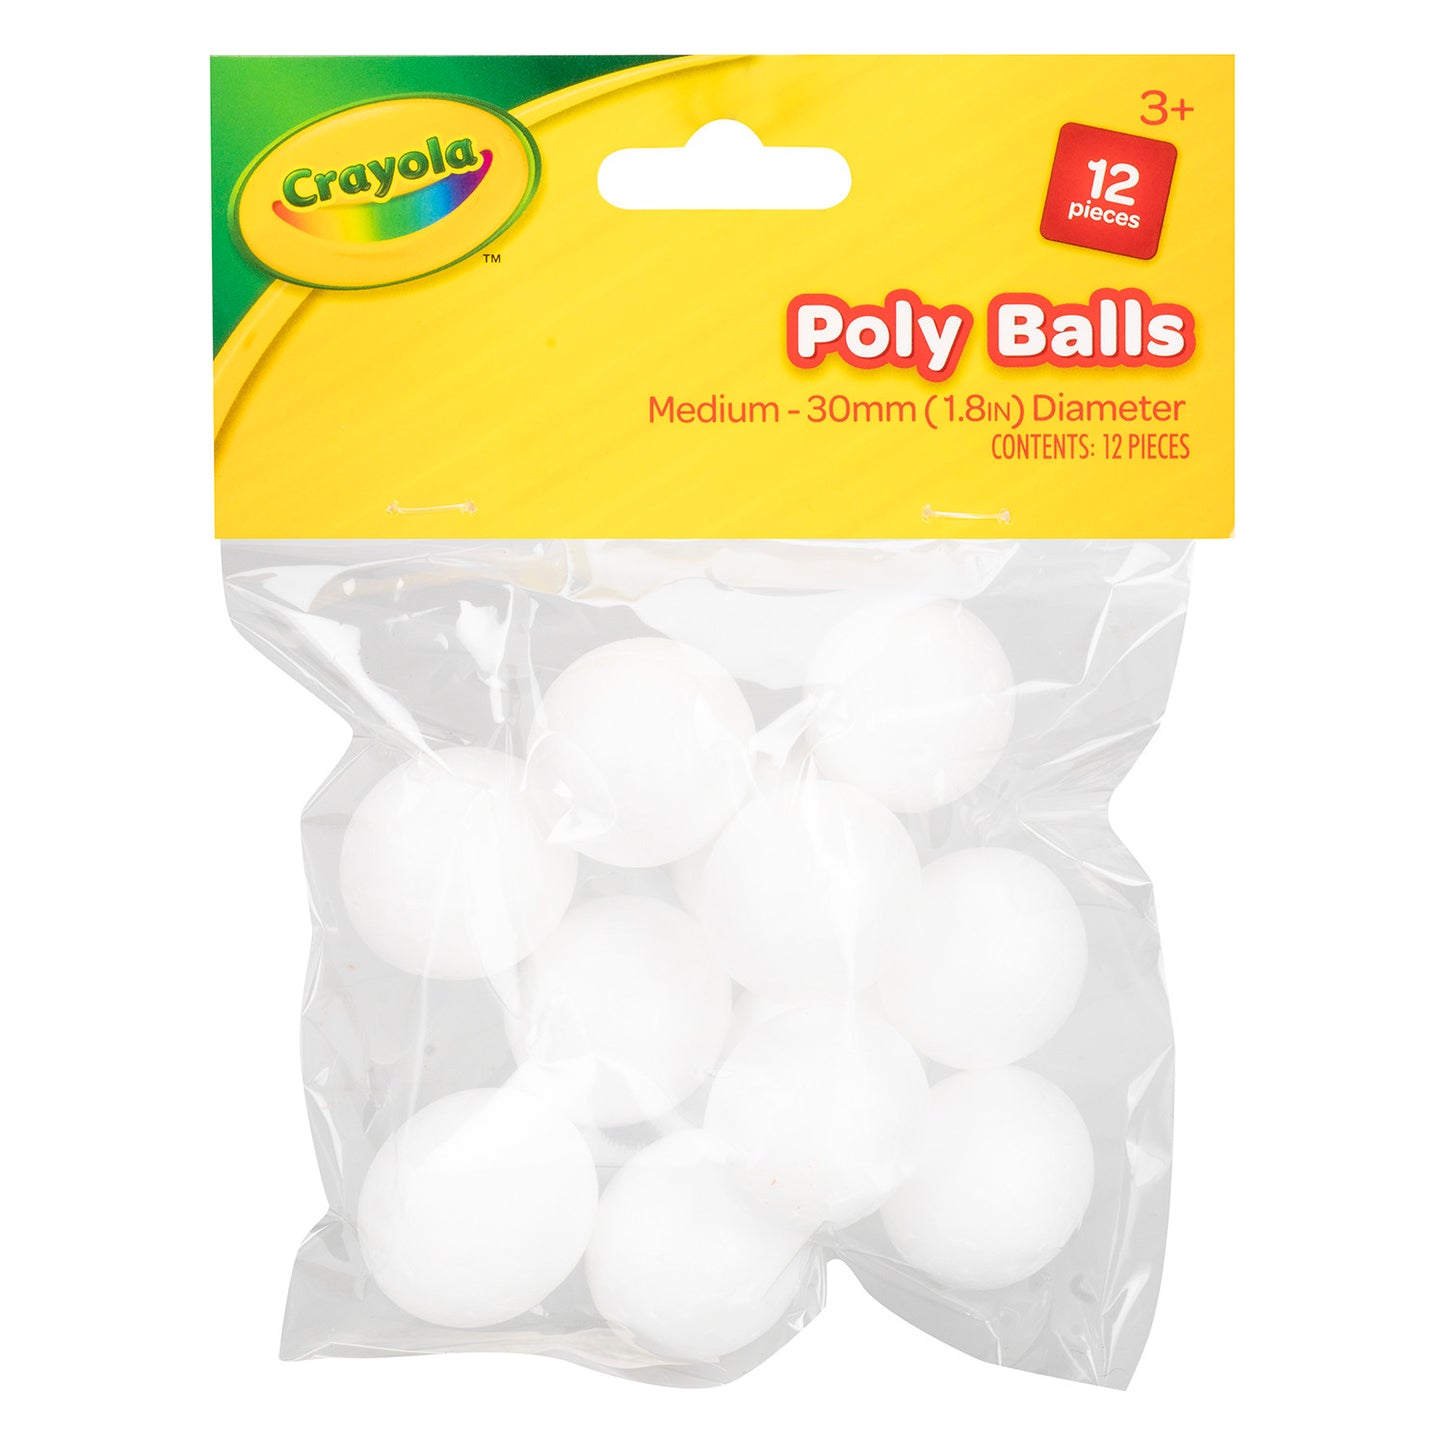 Crayola Poly Balls Medium 12pc